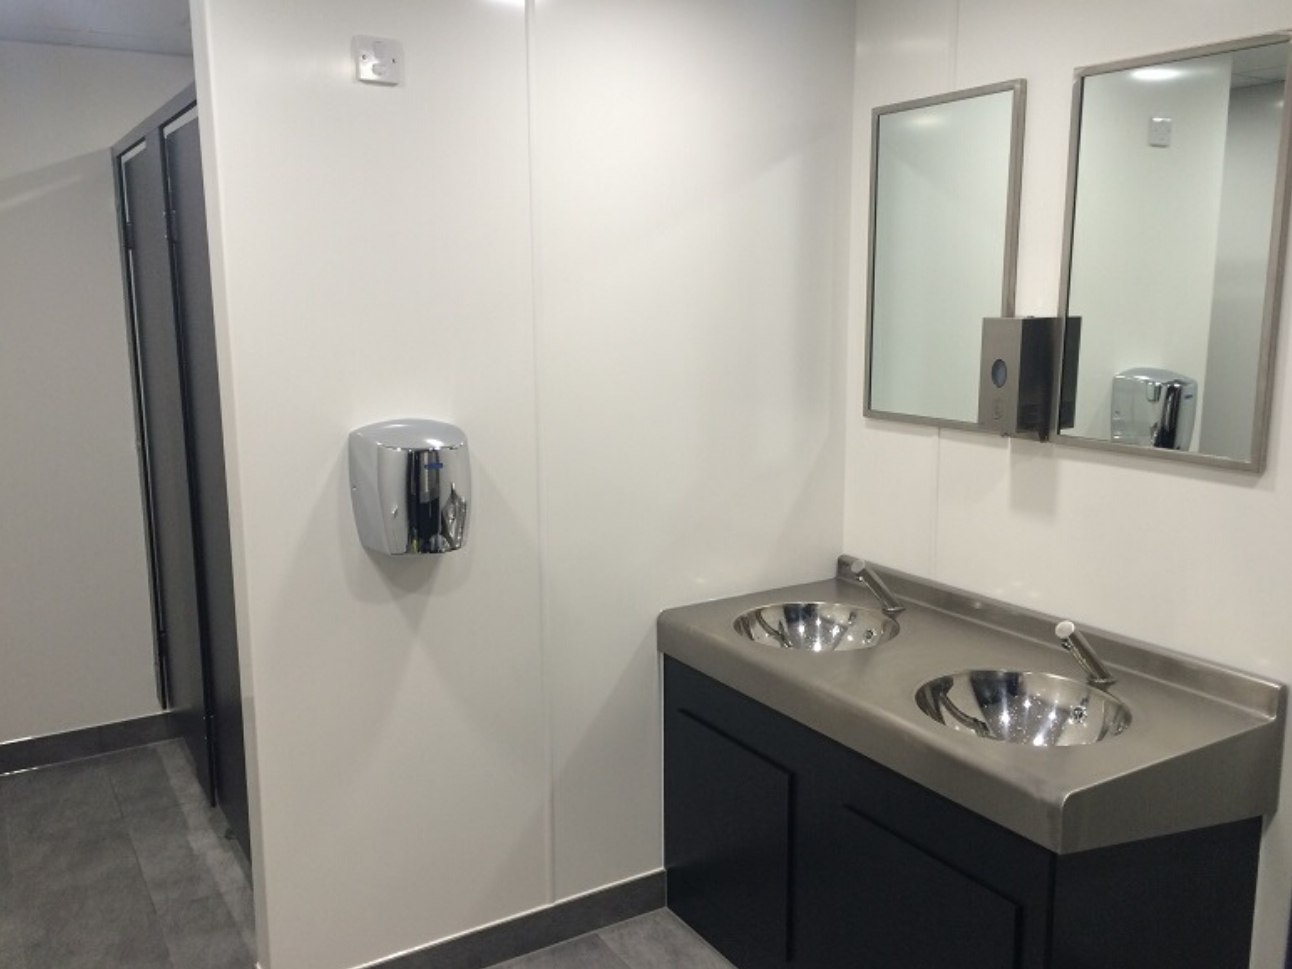 Metroline Washroom Case Study | Commercial Washrooms